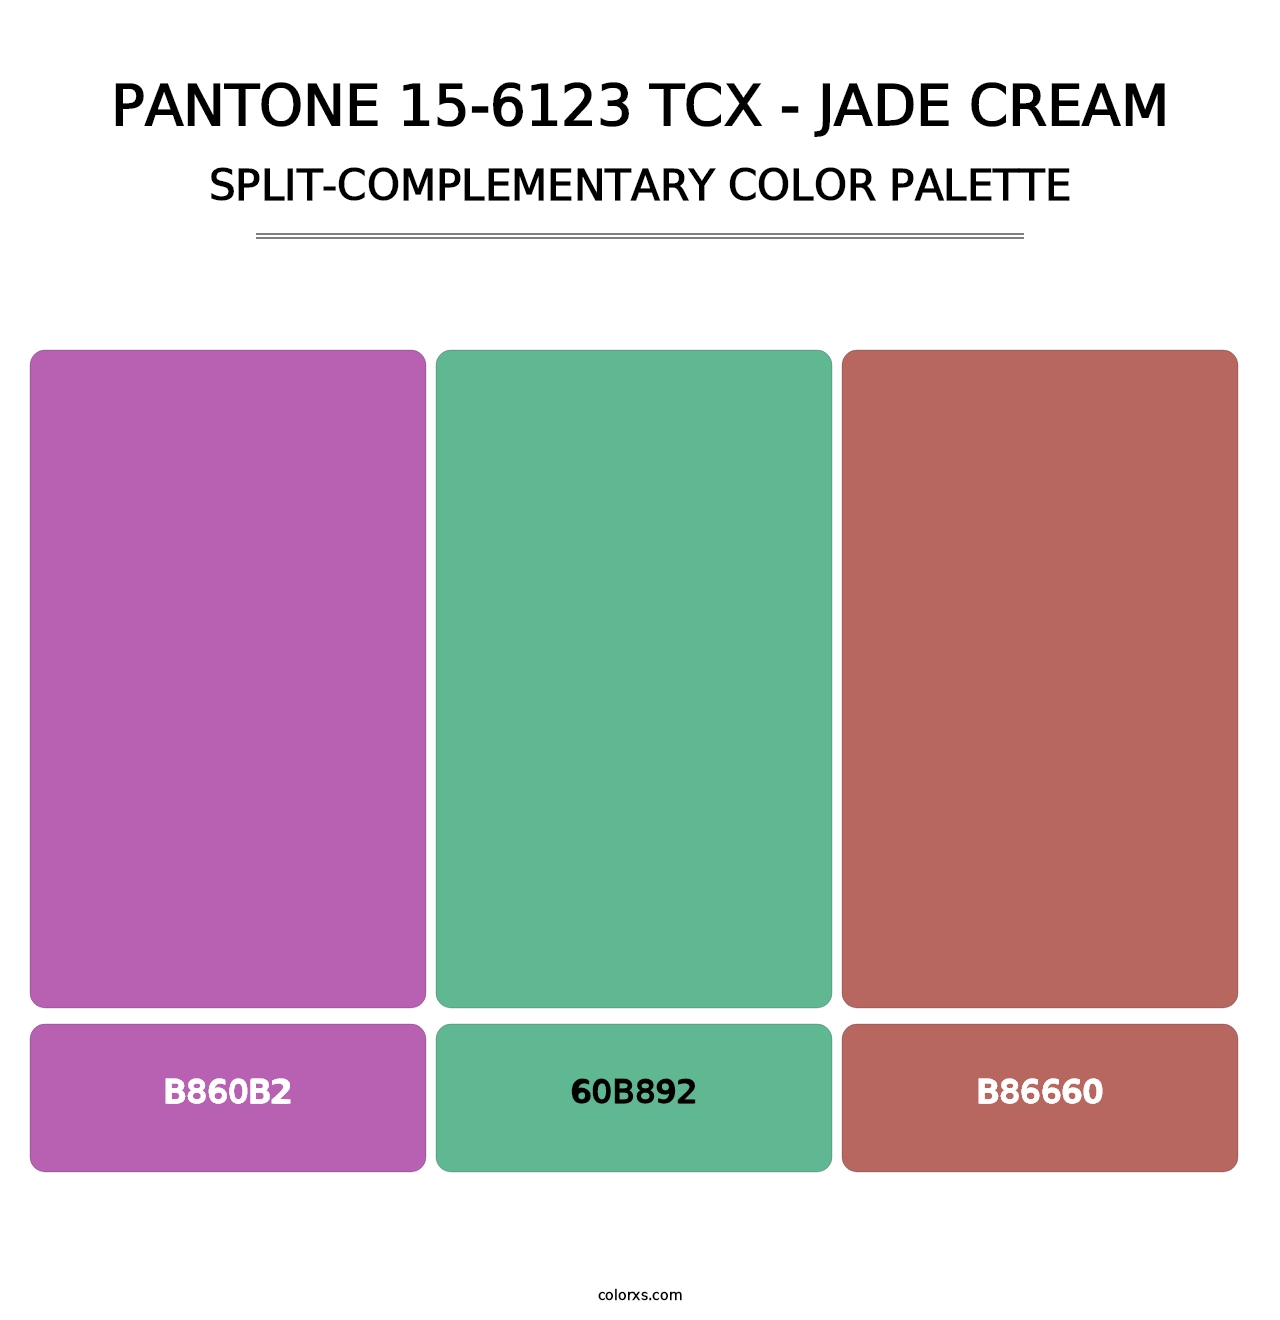 PANTONE 15-6123 TCX - Jade Cream - Split-Complementary Color Palette